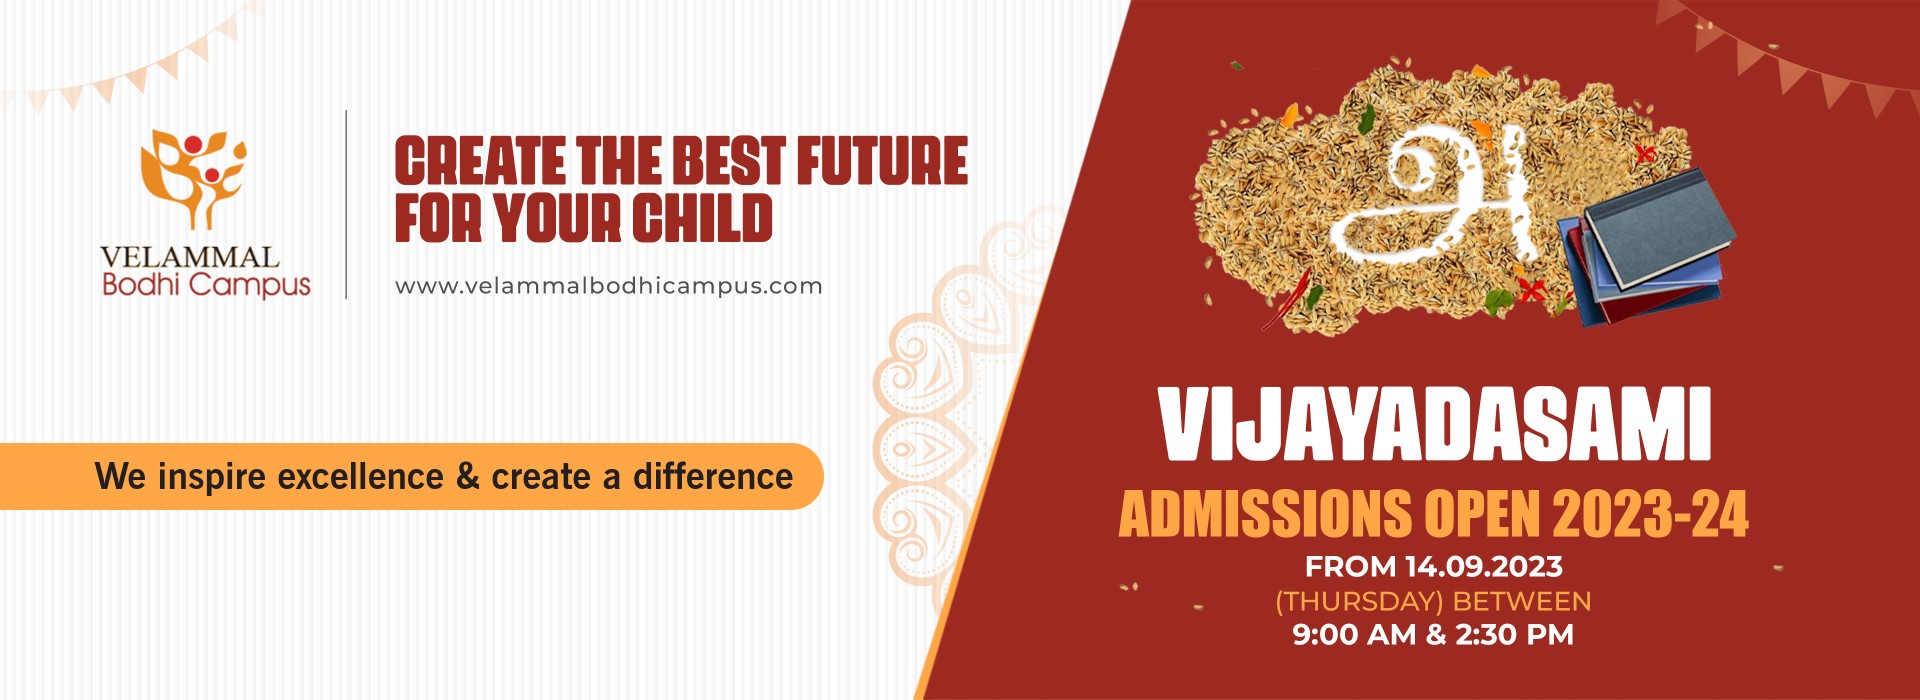 Vijayadasami Admission Open 2023-24 - Velammal Campus Coimbatore